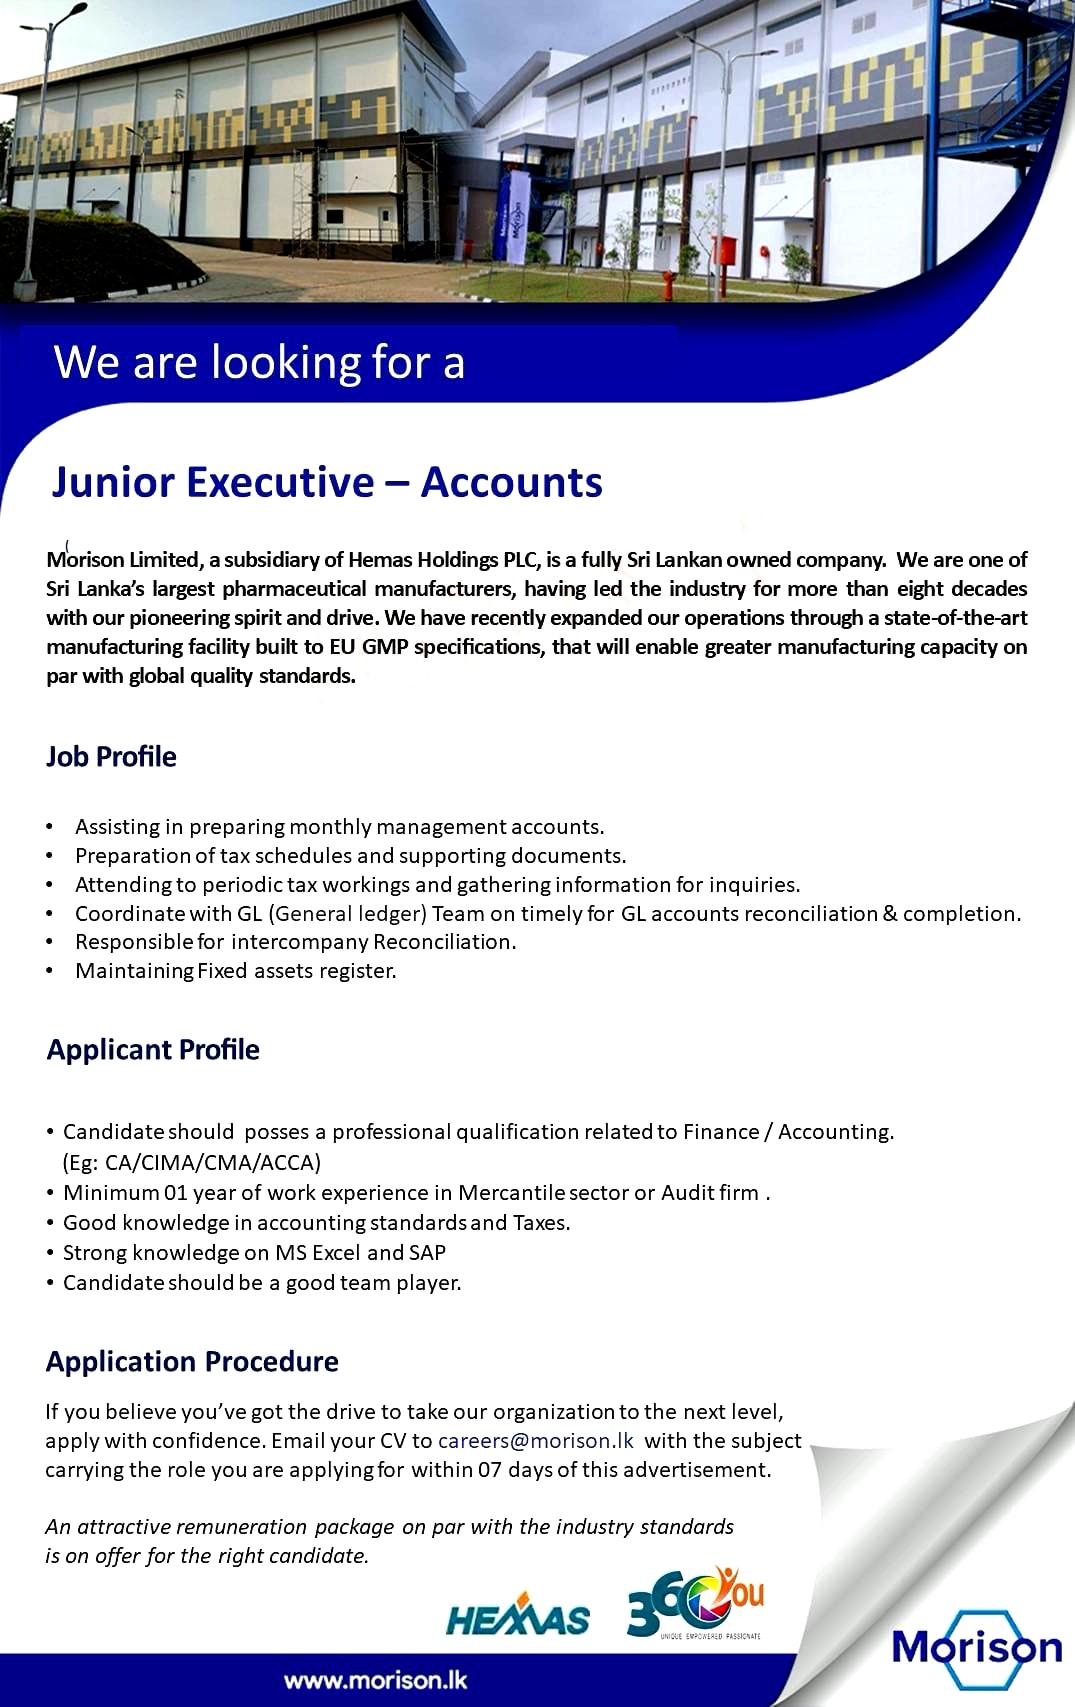 Junior Executive (Accounts) Jobs Vacancies in Hemas Holdings PLC Application